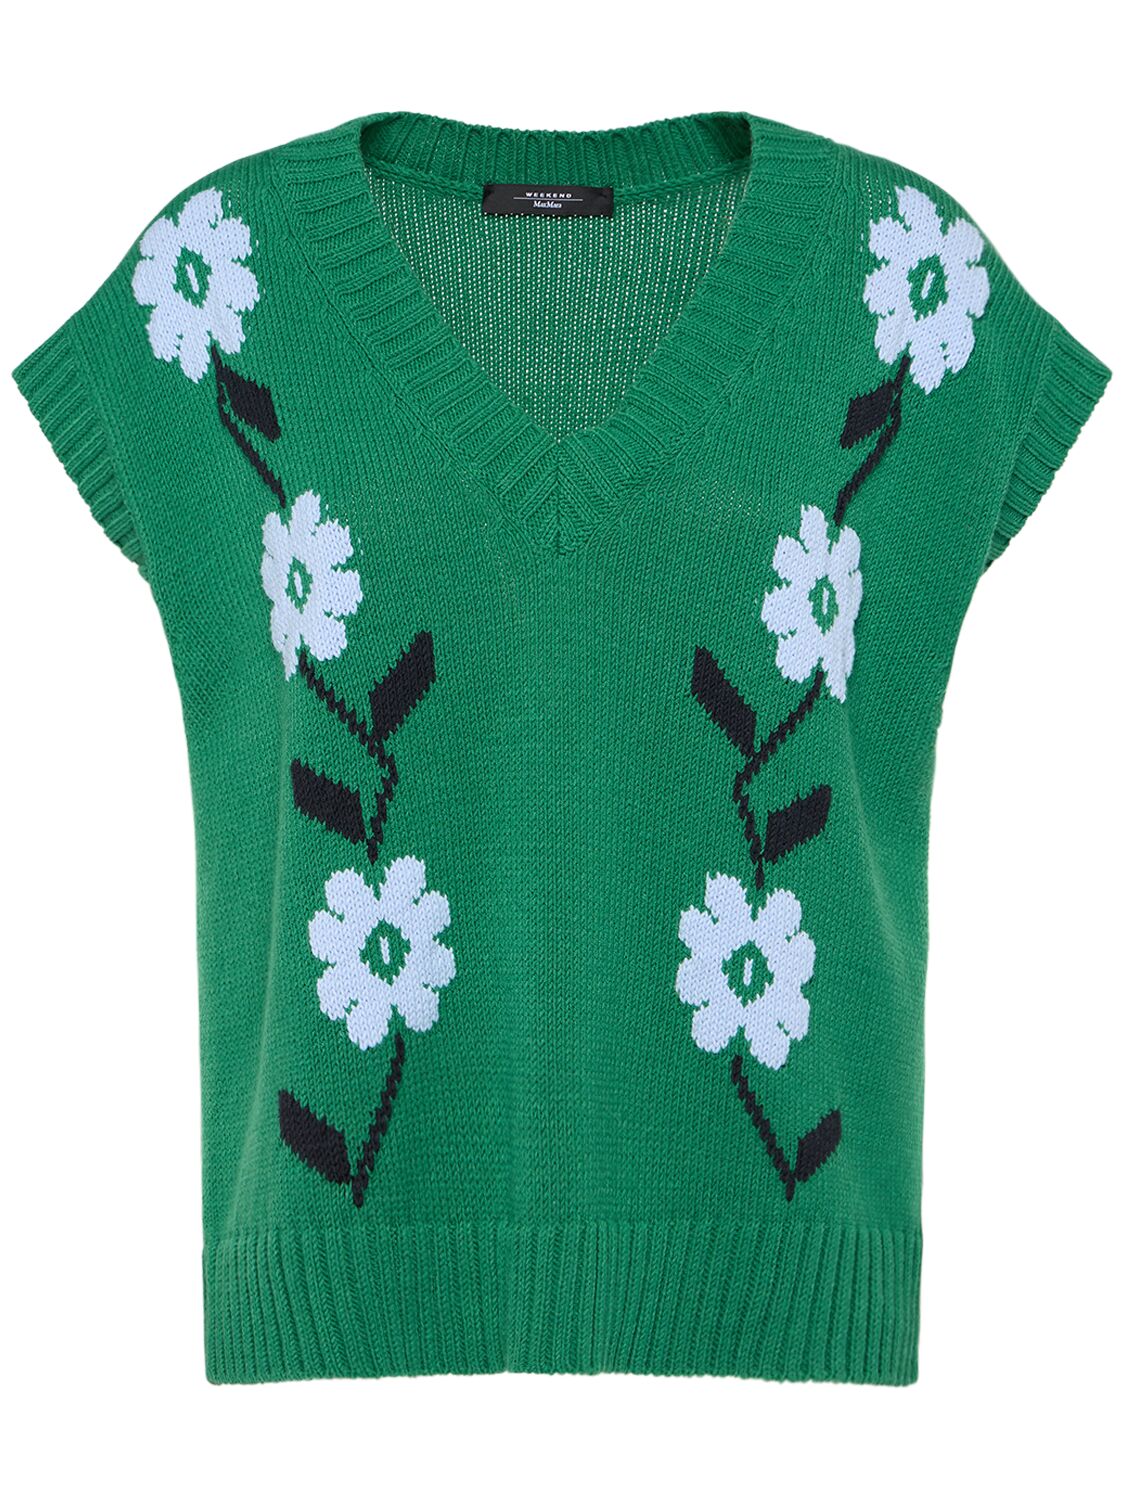 Weekend Max Mara Austria Embroidered Cotton Blend Vest In Green/multi